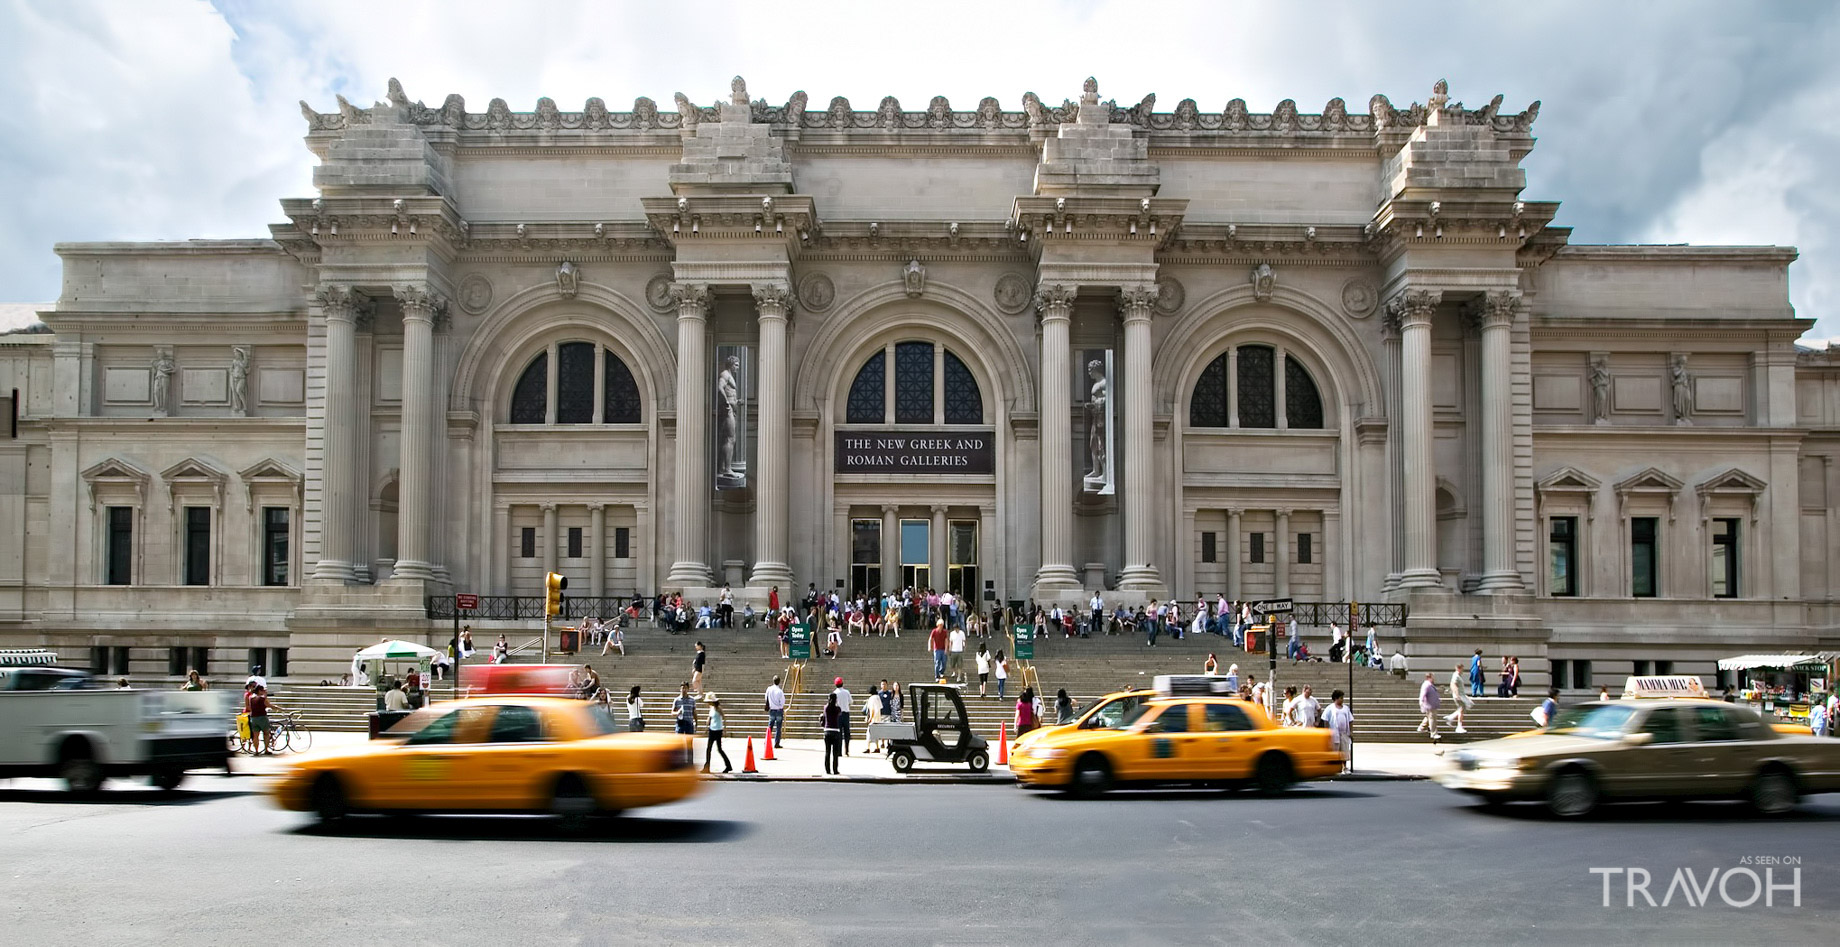 Metropolitan Museum - 1000 Fifth Ave, New York, NY